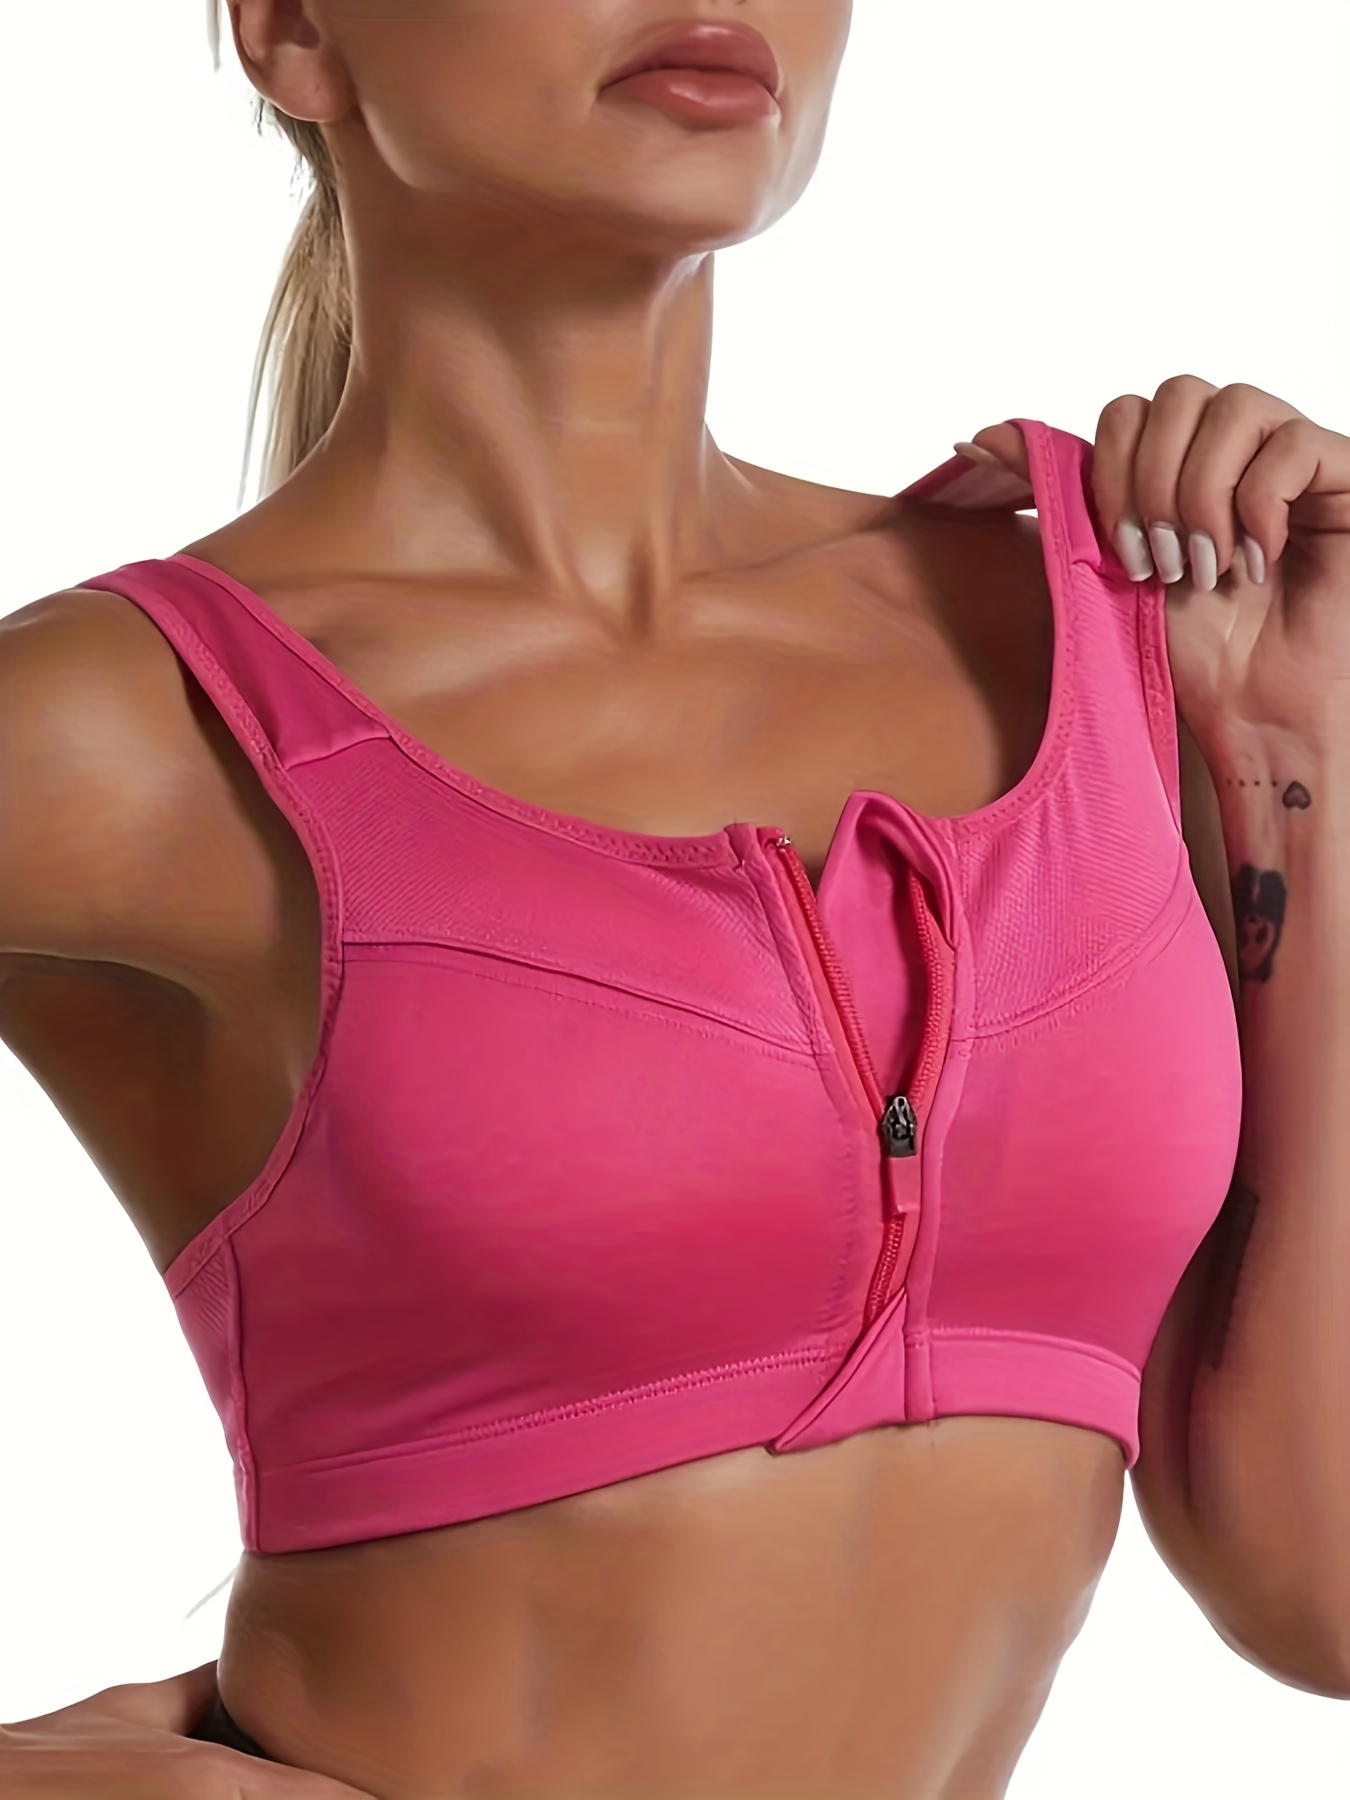 Women's Zipper Front Closure Sports Bra, Seamless Wirefree Zipper Padded  Workout Gym Yoga Bras, Red, XL 